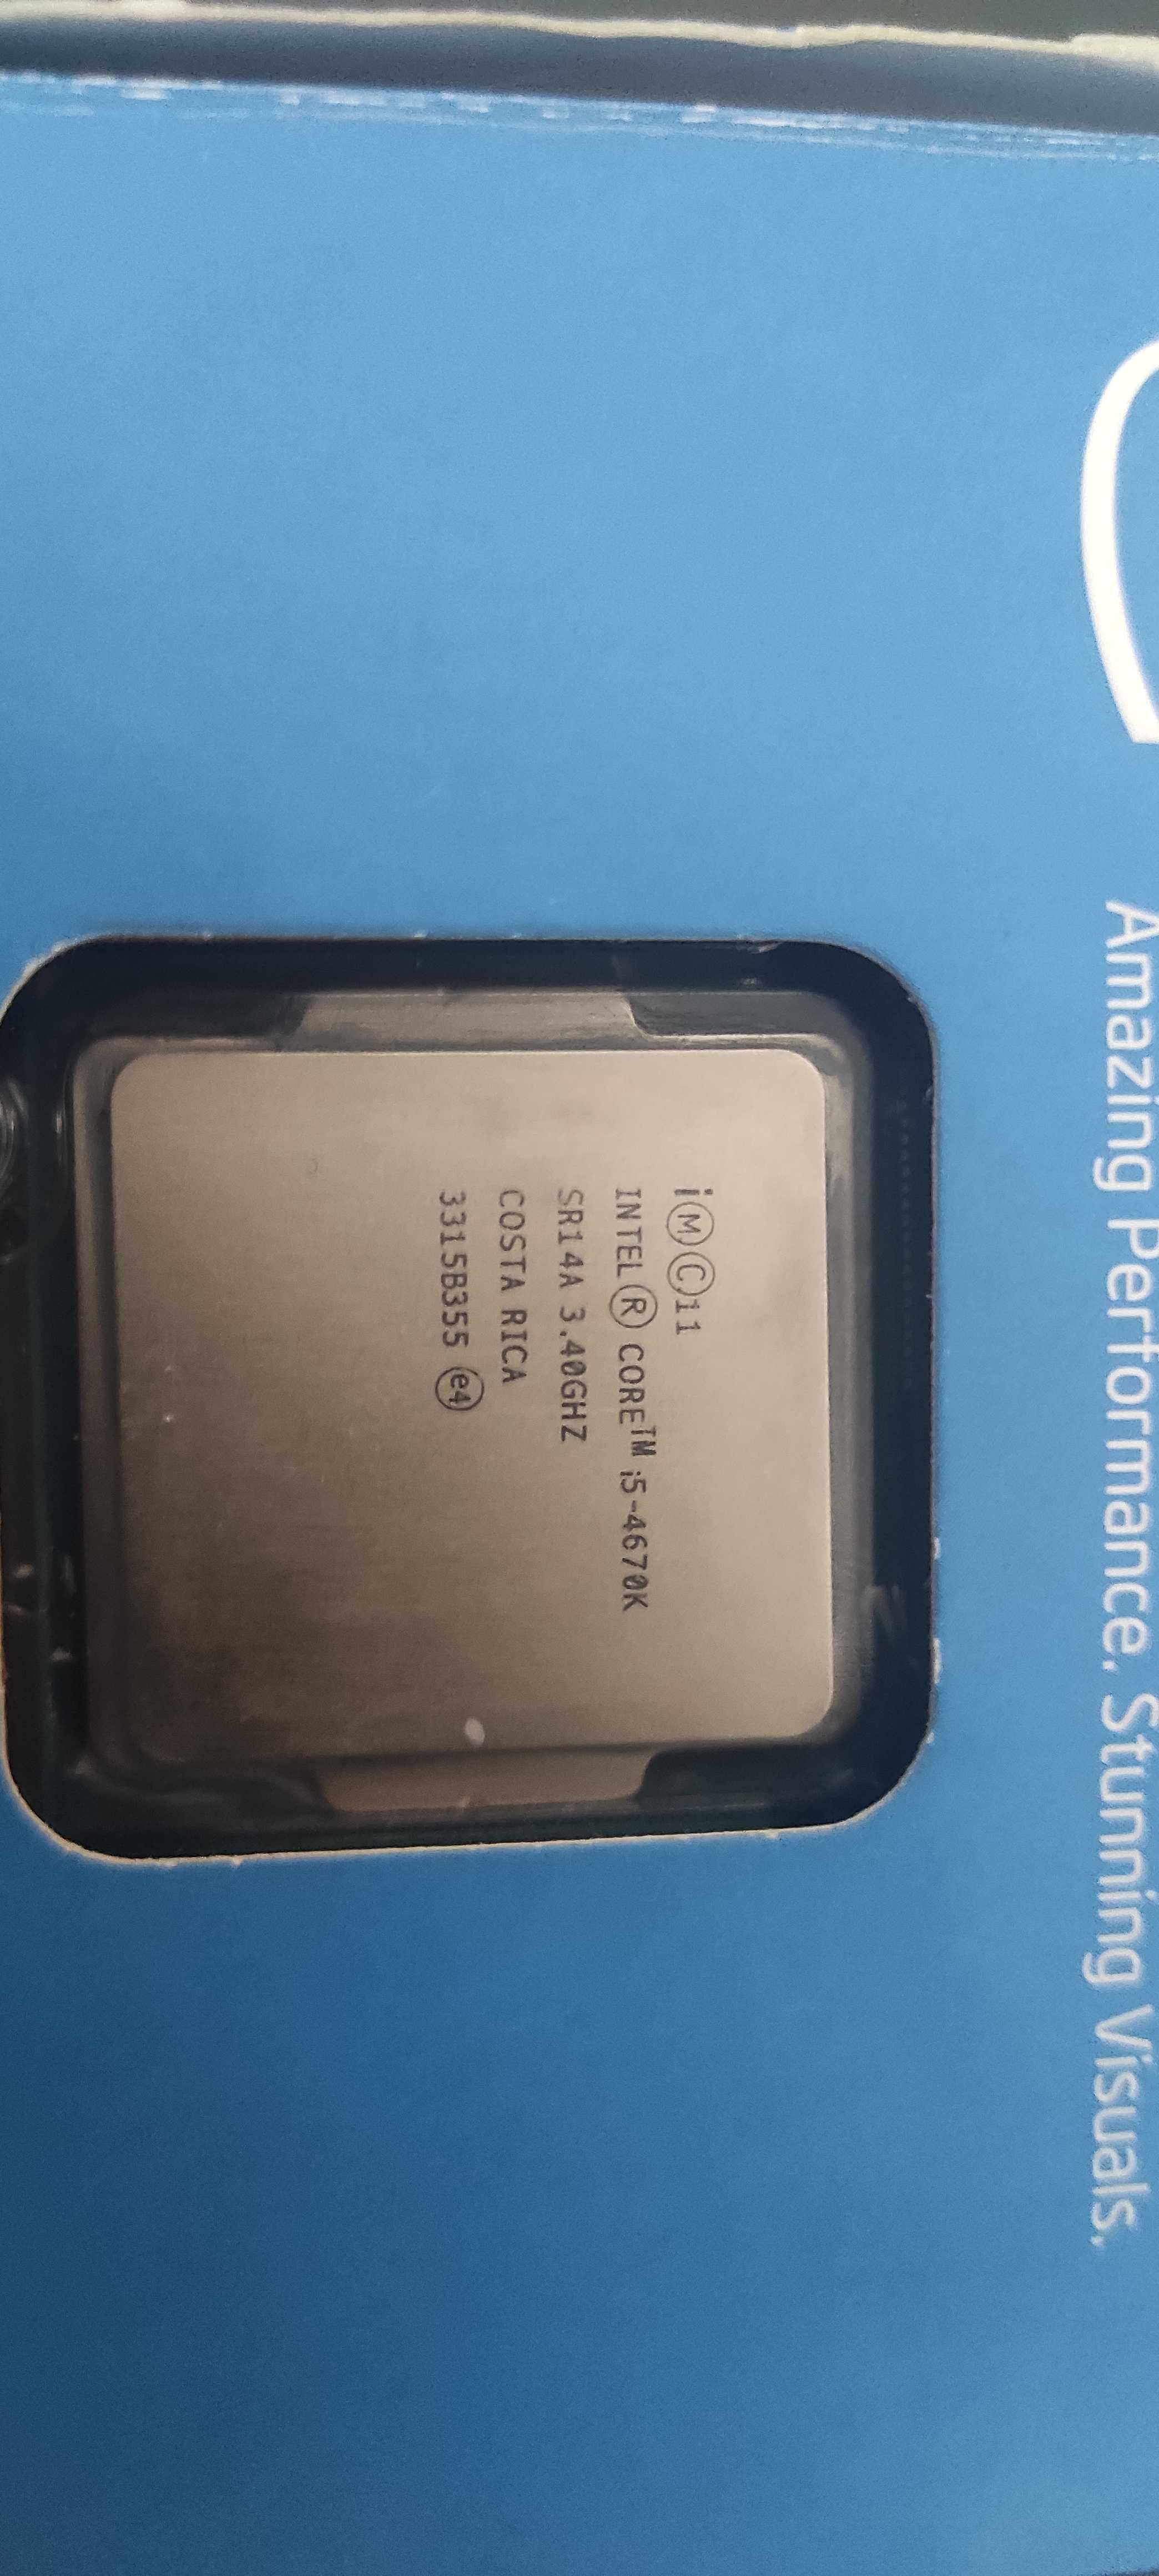 Procesor Intel i5 4670k